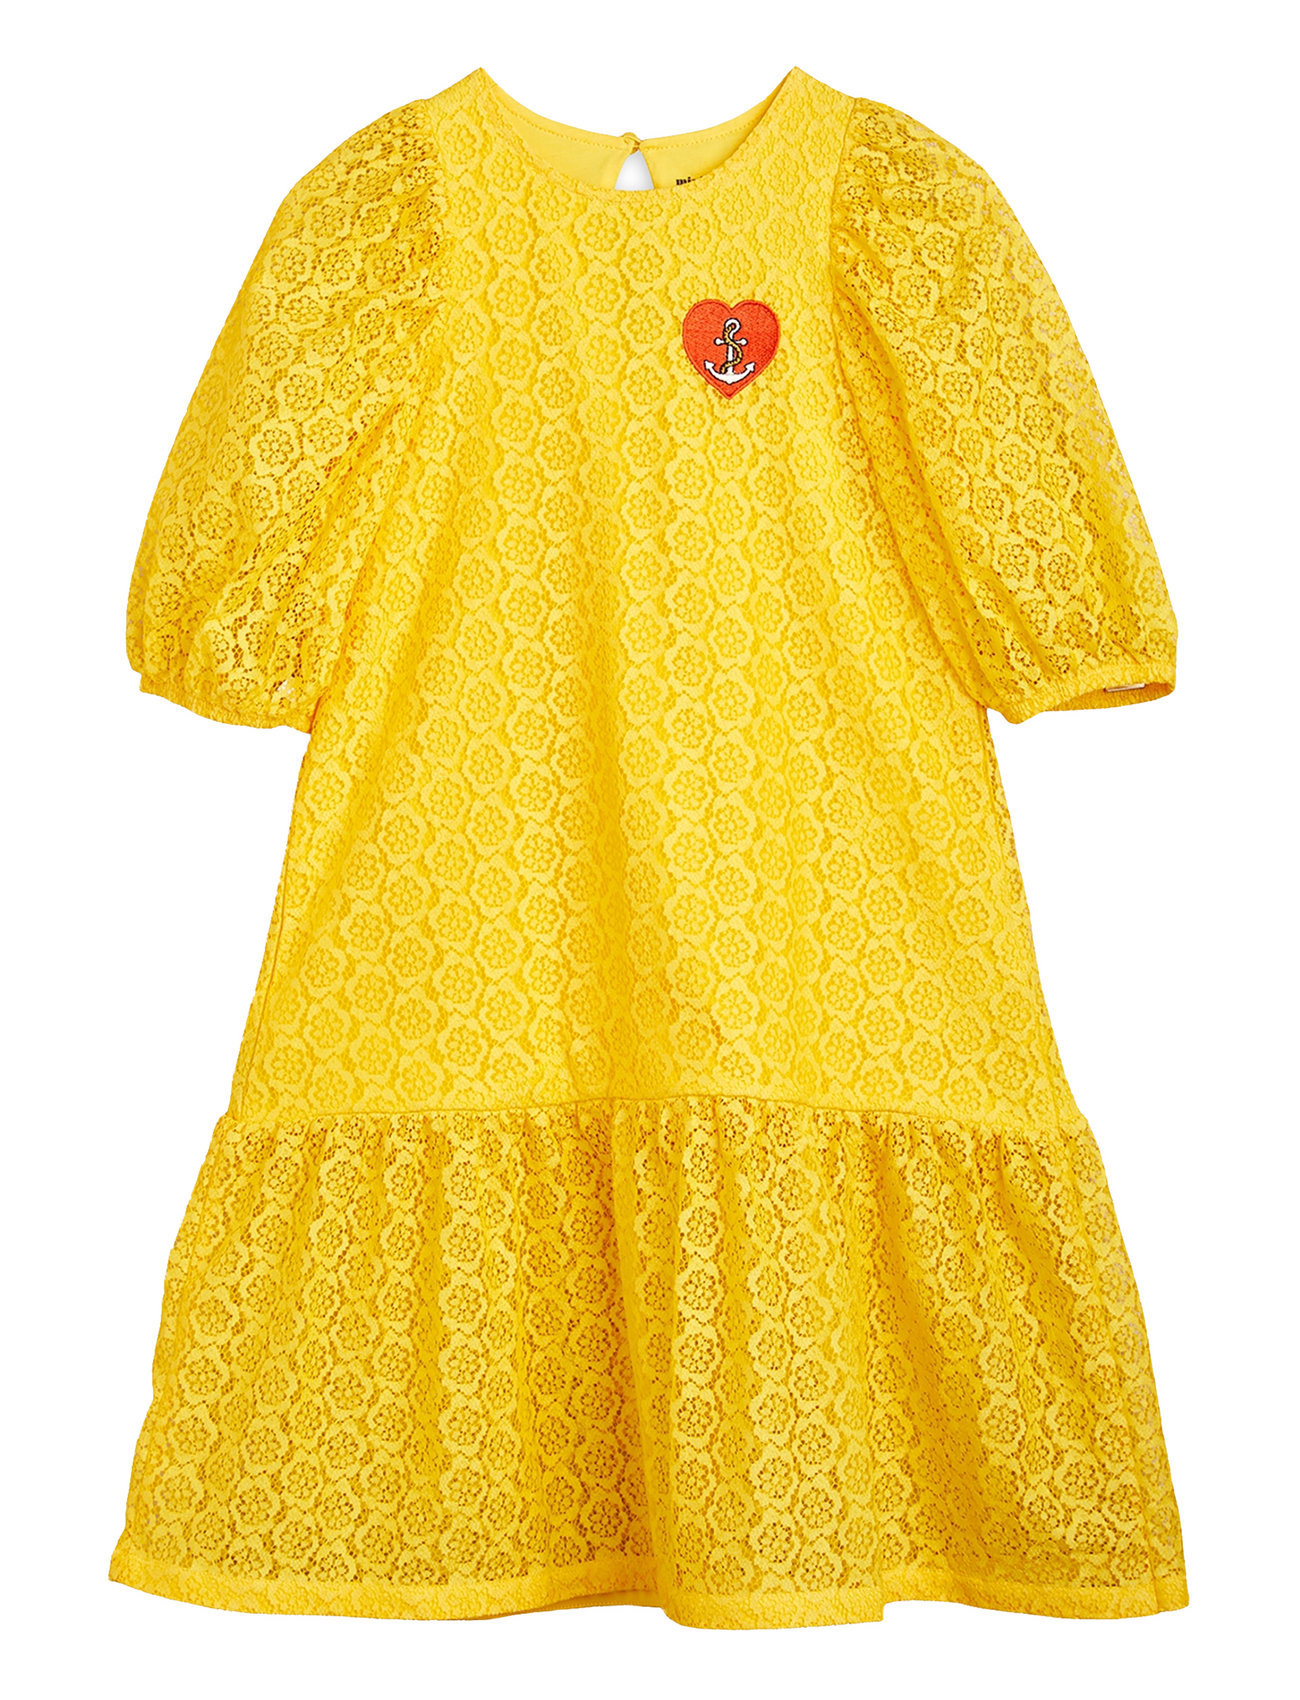 Lace Dress Dresses & Skirts Dresses Casual Dresses Short-sleeved Casual Dresses Yellow Mini Rodini